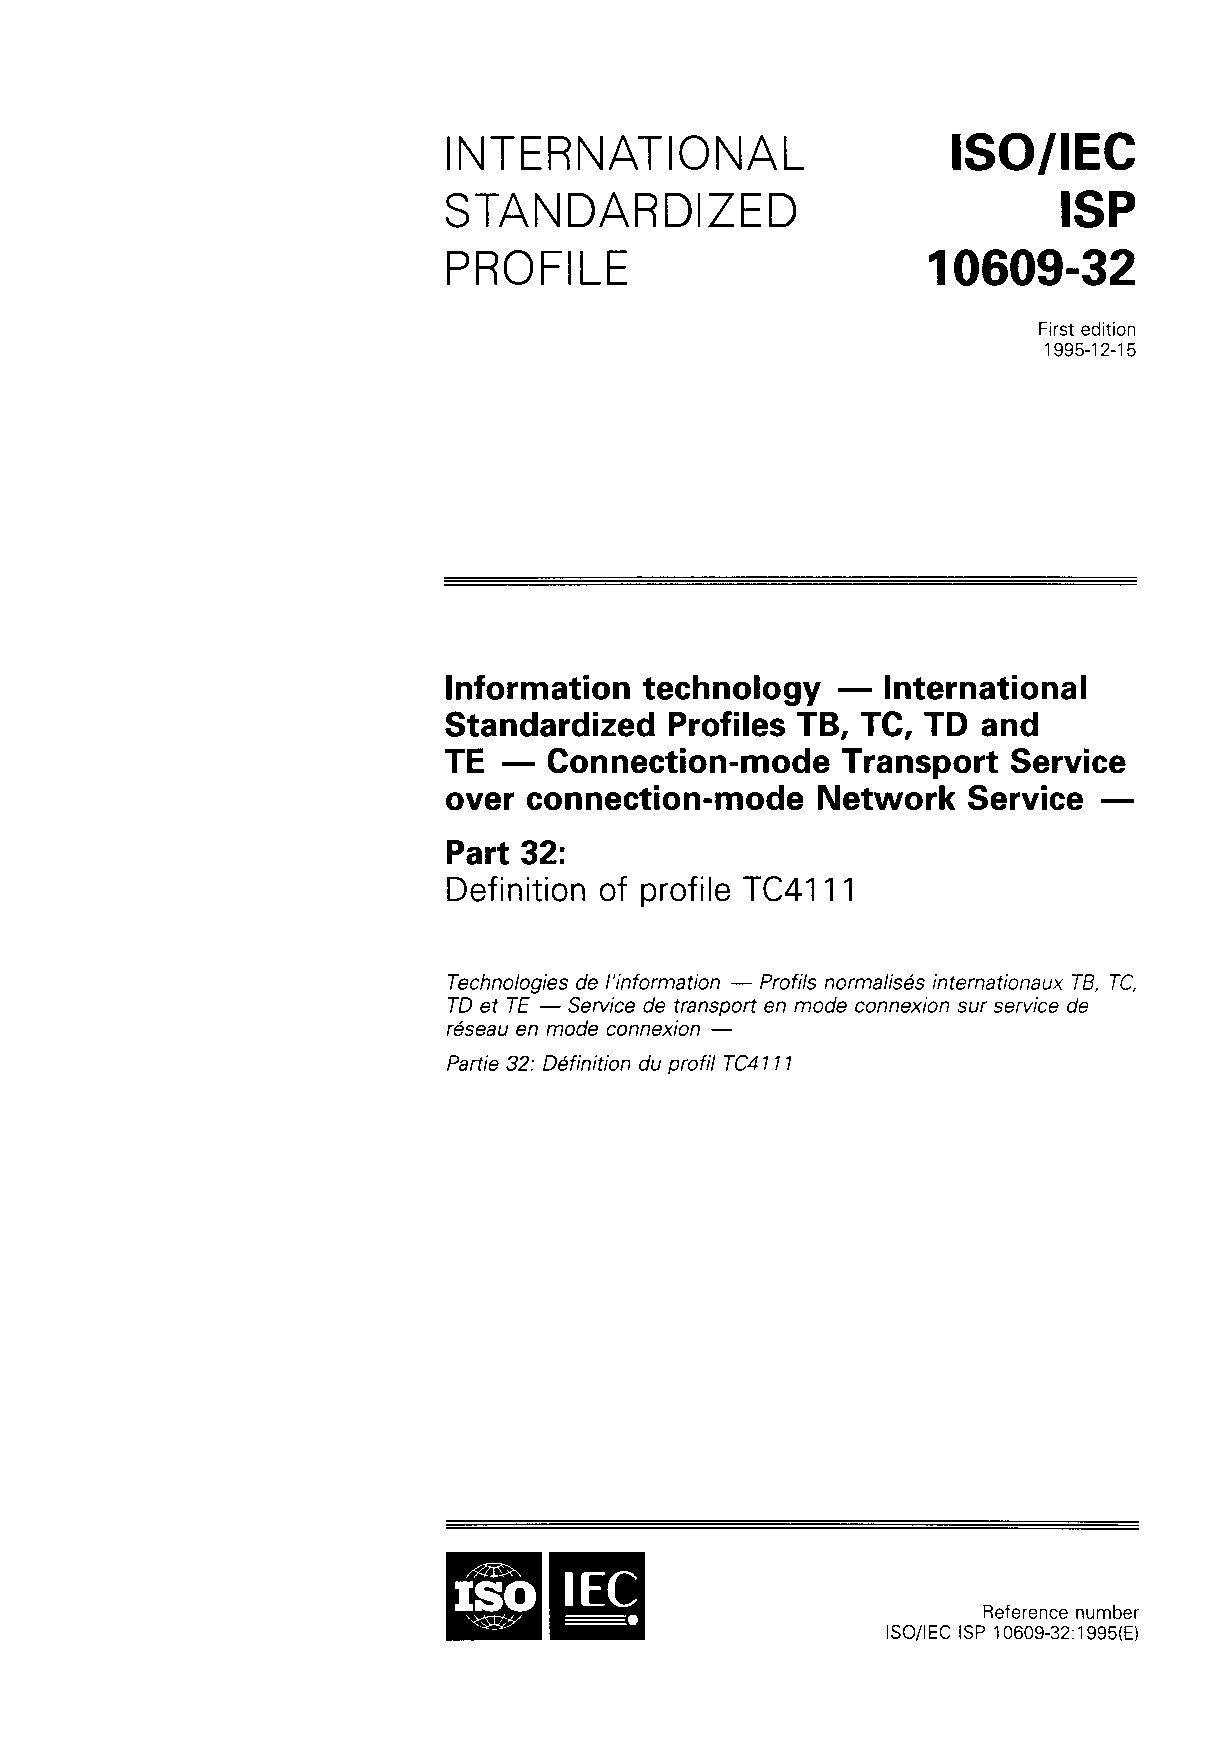 ISO/IEC ISP 10609-32:1995